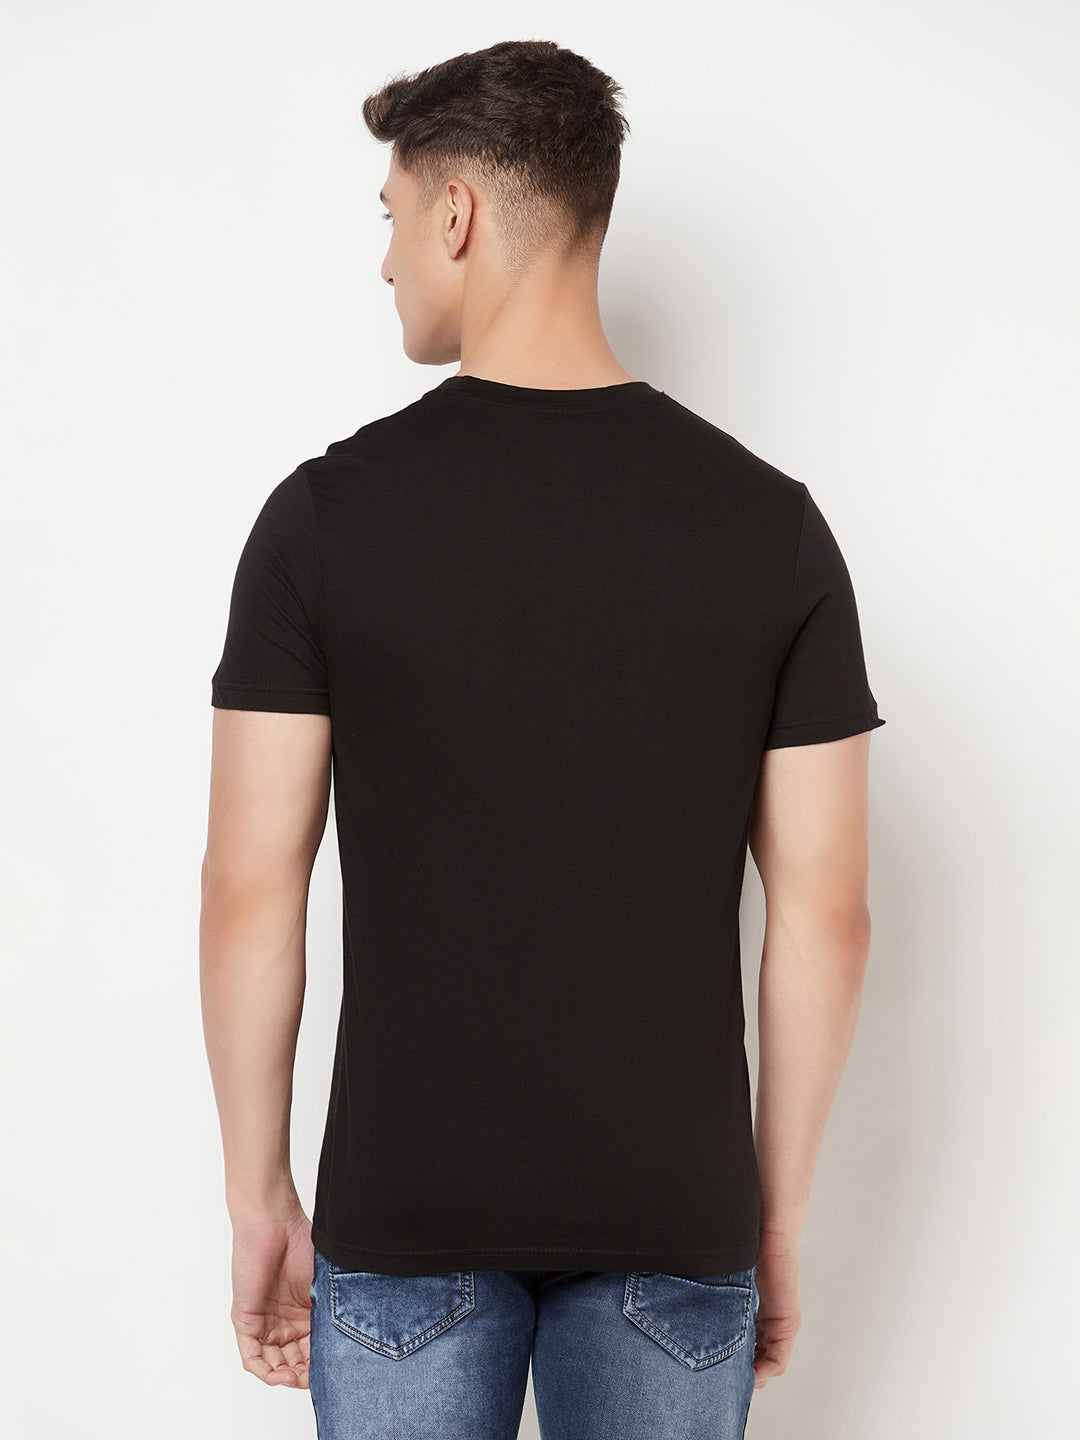 Men's Premium Cotton Tshirts  (Pack of 2- Black,Grey) - NITLON * TRUEREVO